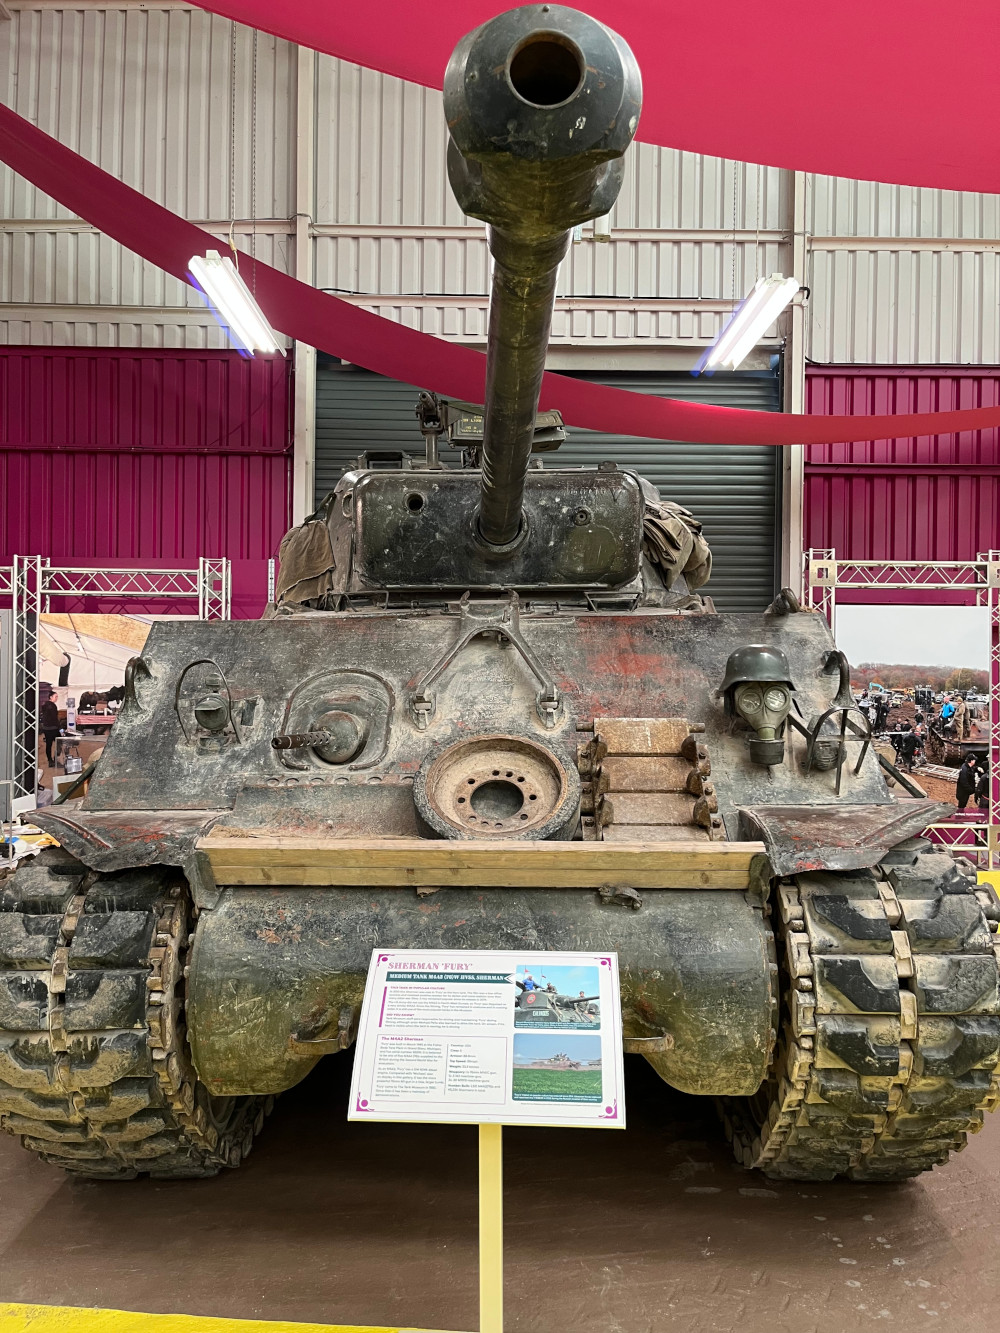 The Sherman Tank from the film Fury at Bovington Tank Museum